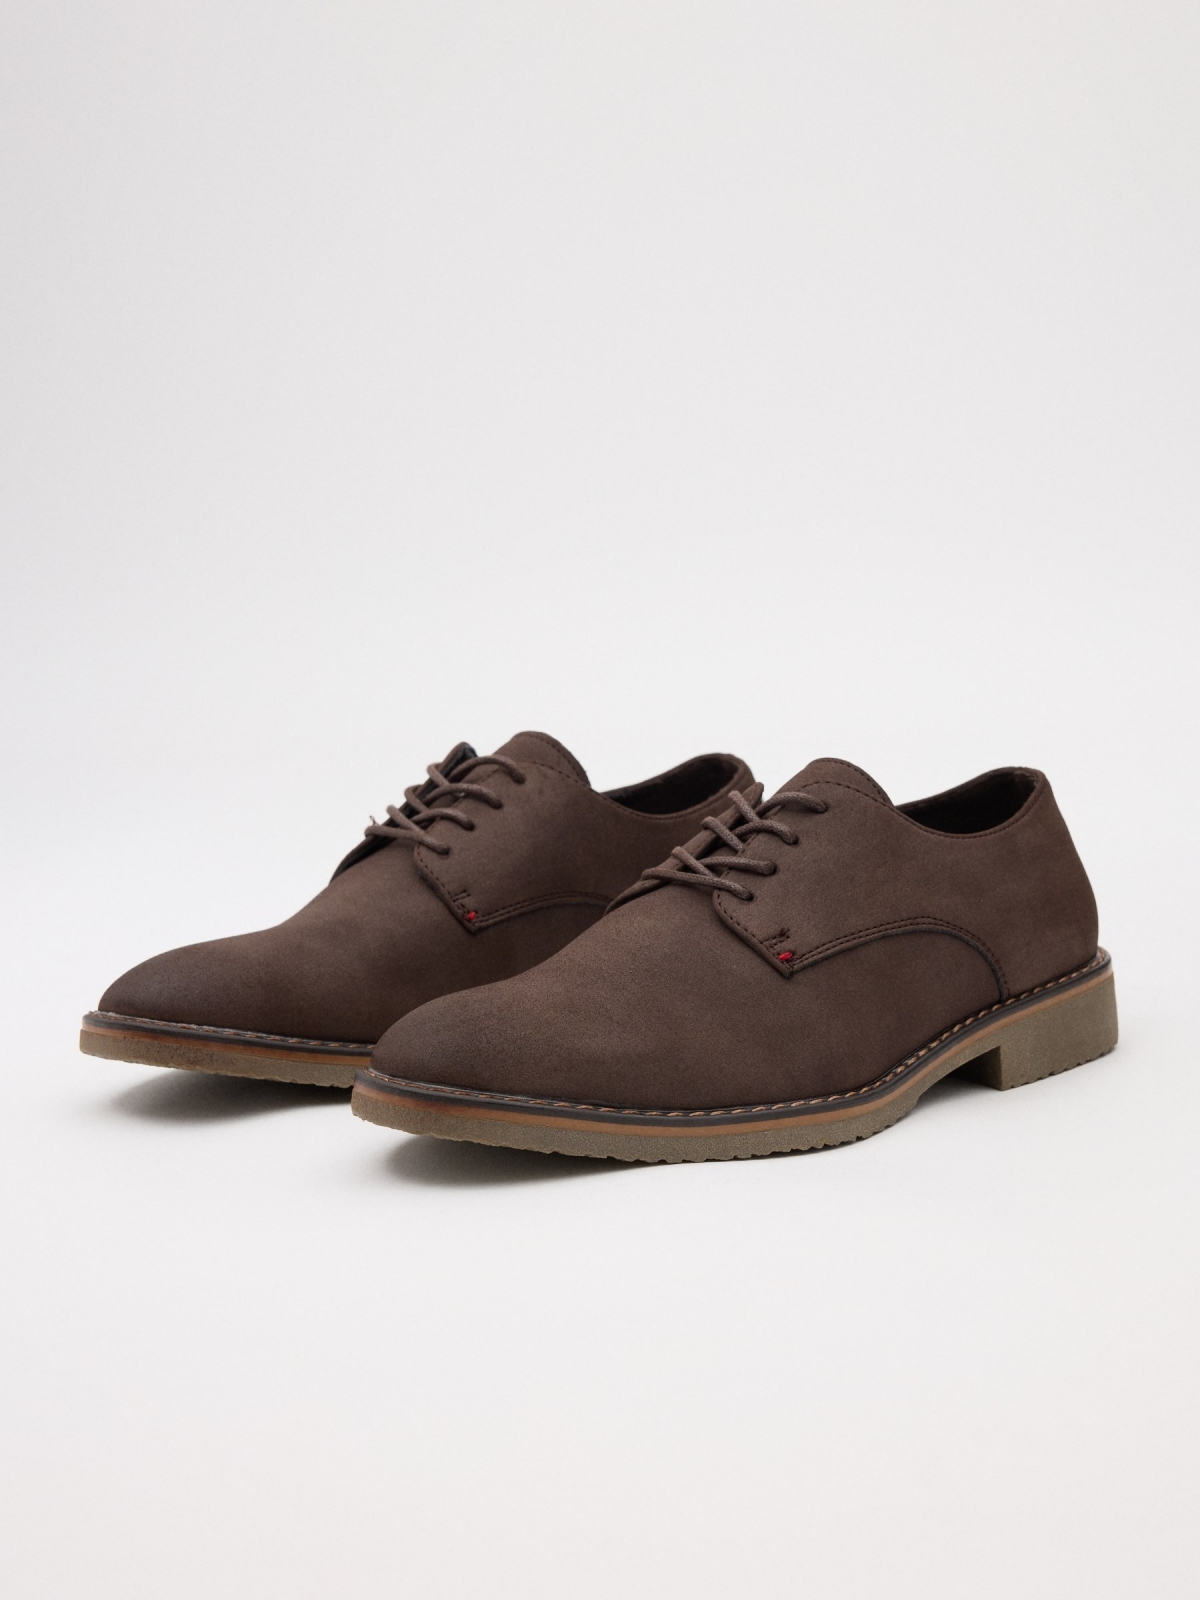 Zapato clásico de polipiel marrón tostado vista frontal 45º